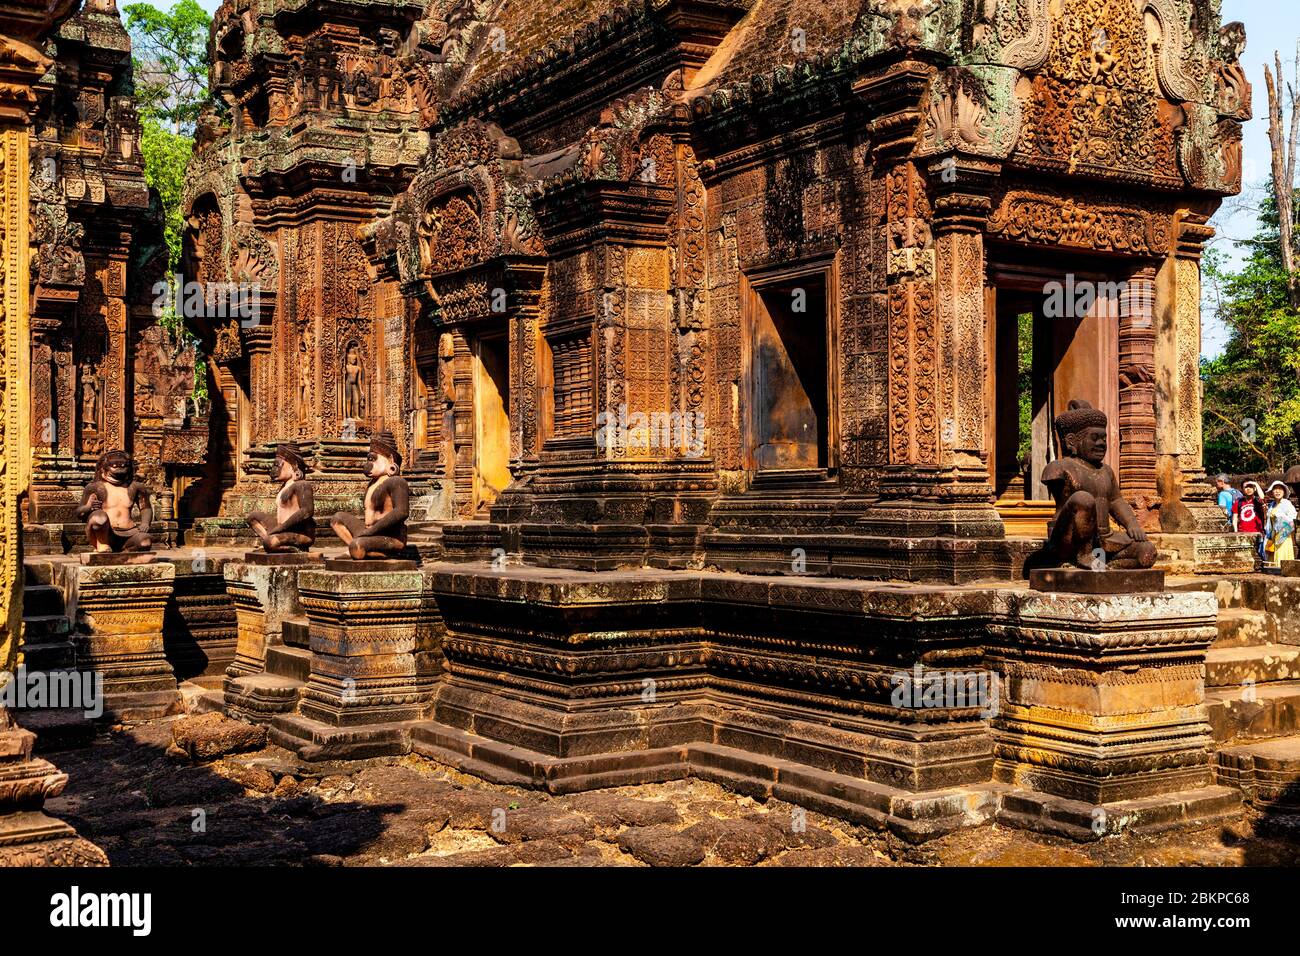 Banteay Srey Temple, Angkor Wat Temple Complex, Siem Reap, Cambodia. Stock Photo